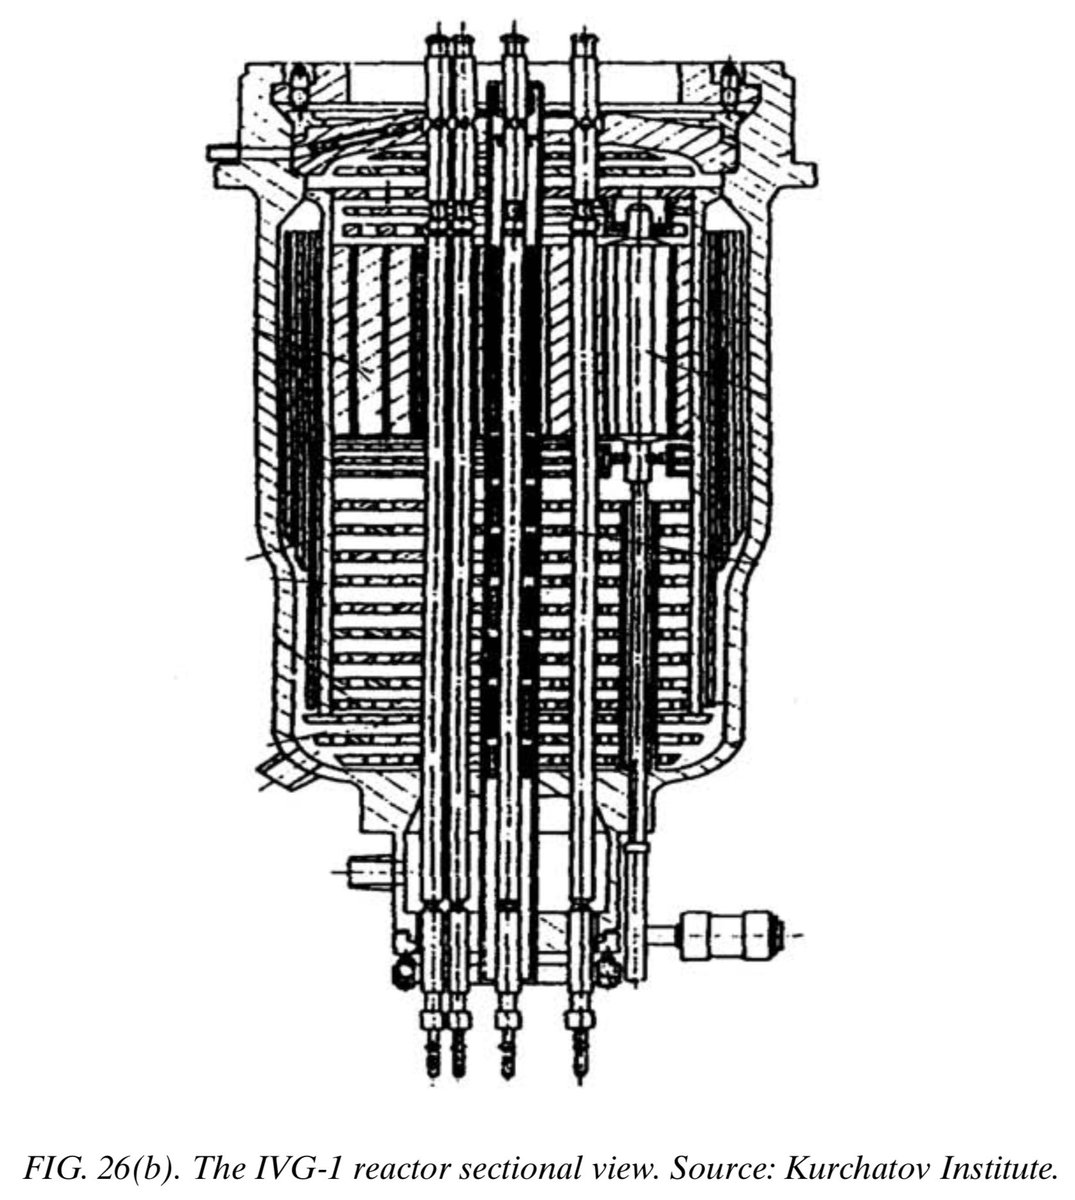 IVG-1 experimental reactor